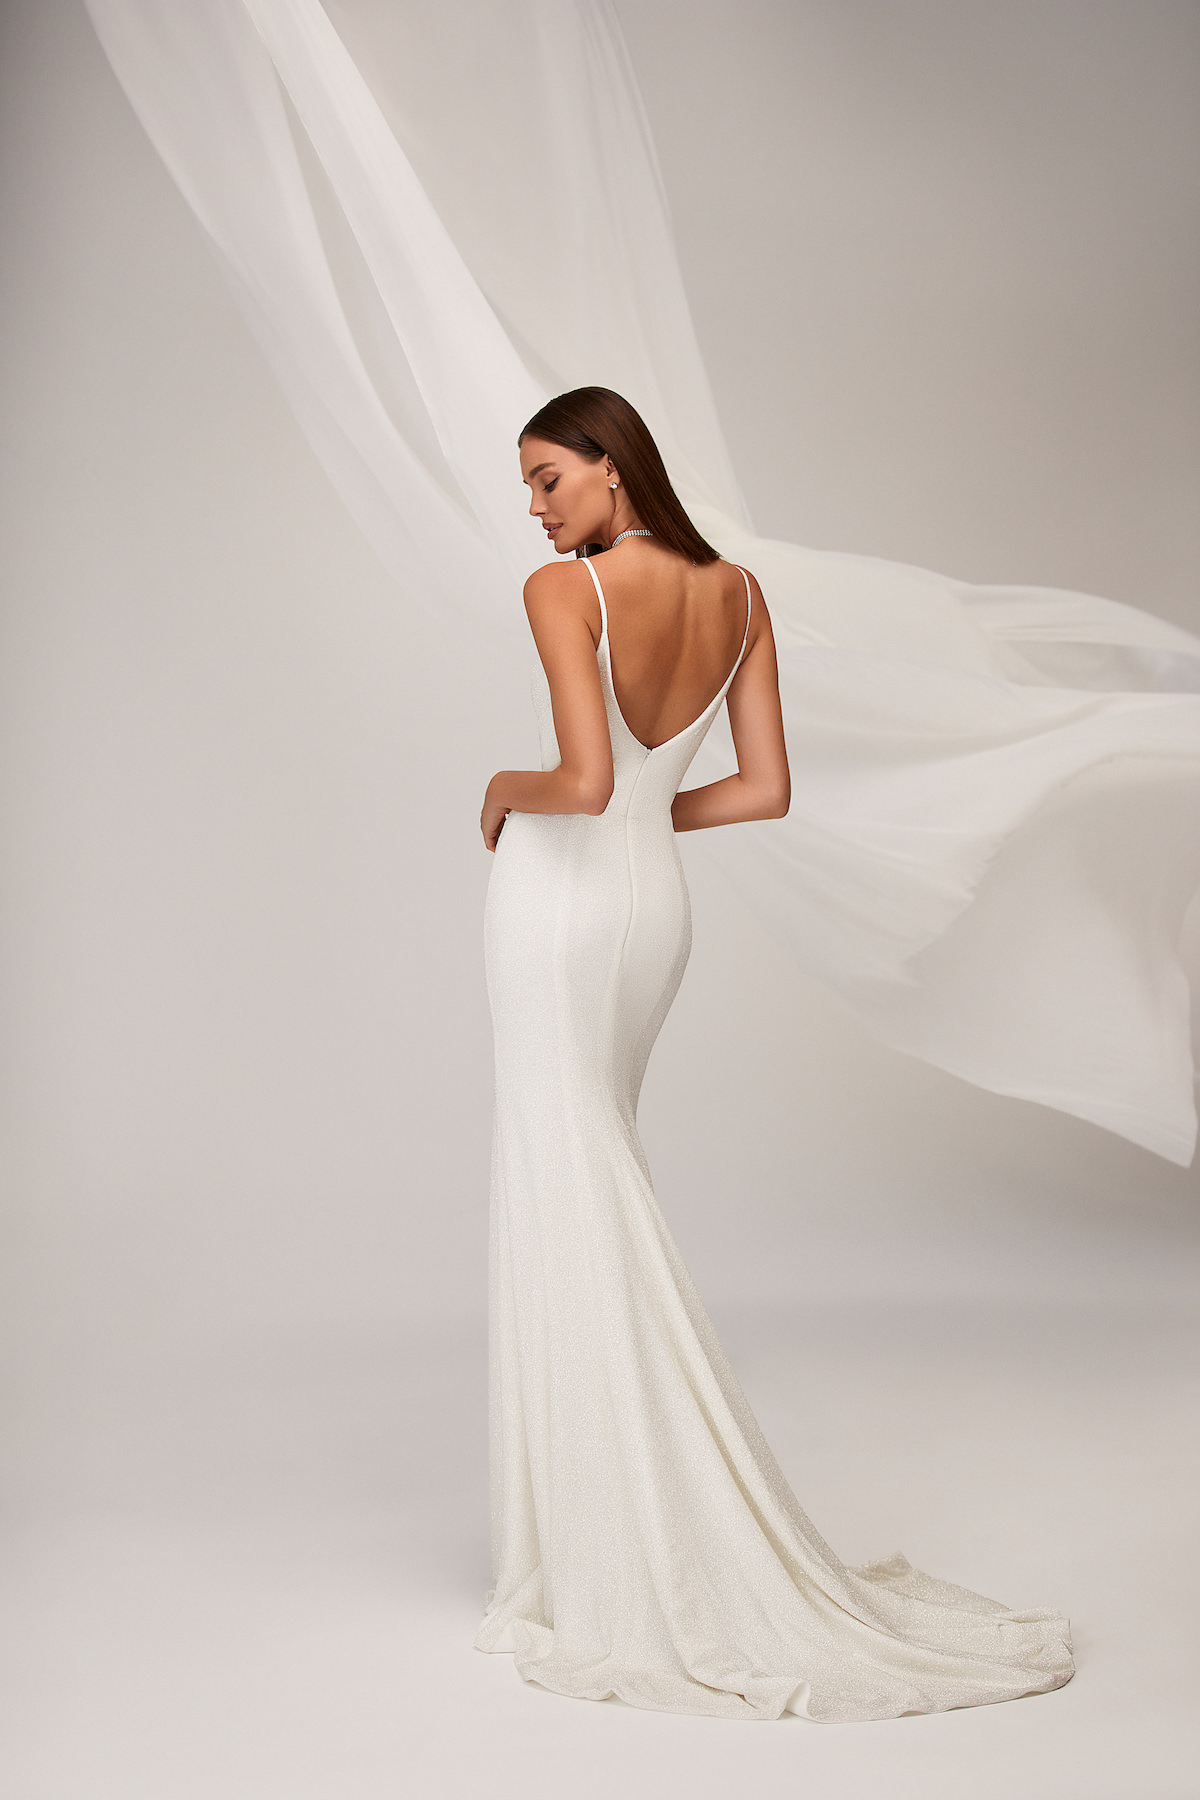 Ariana Grande Wedding Dresses by Milla Nova - Phoebe White Lace